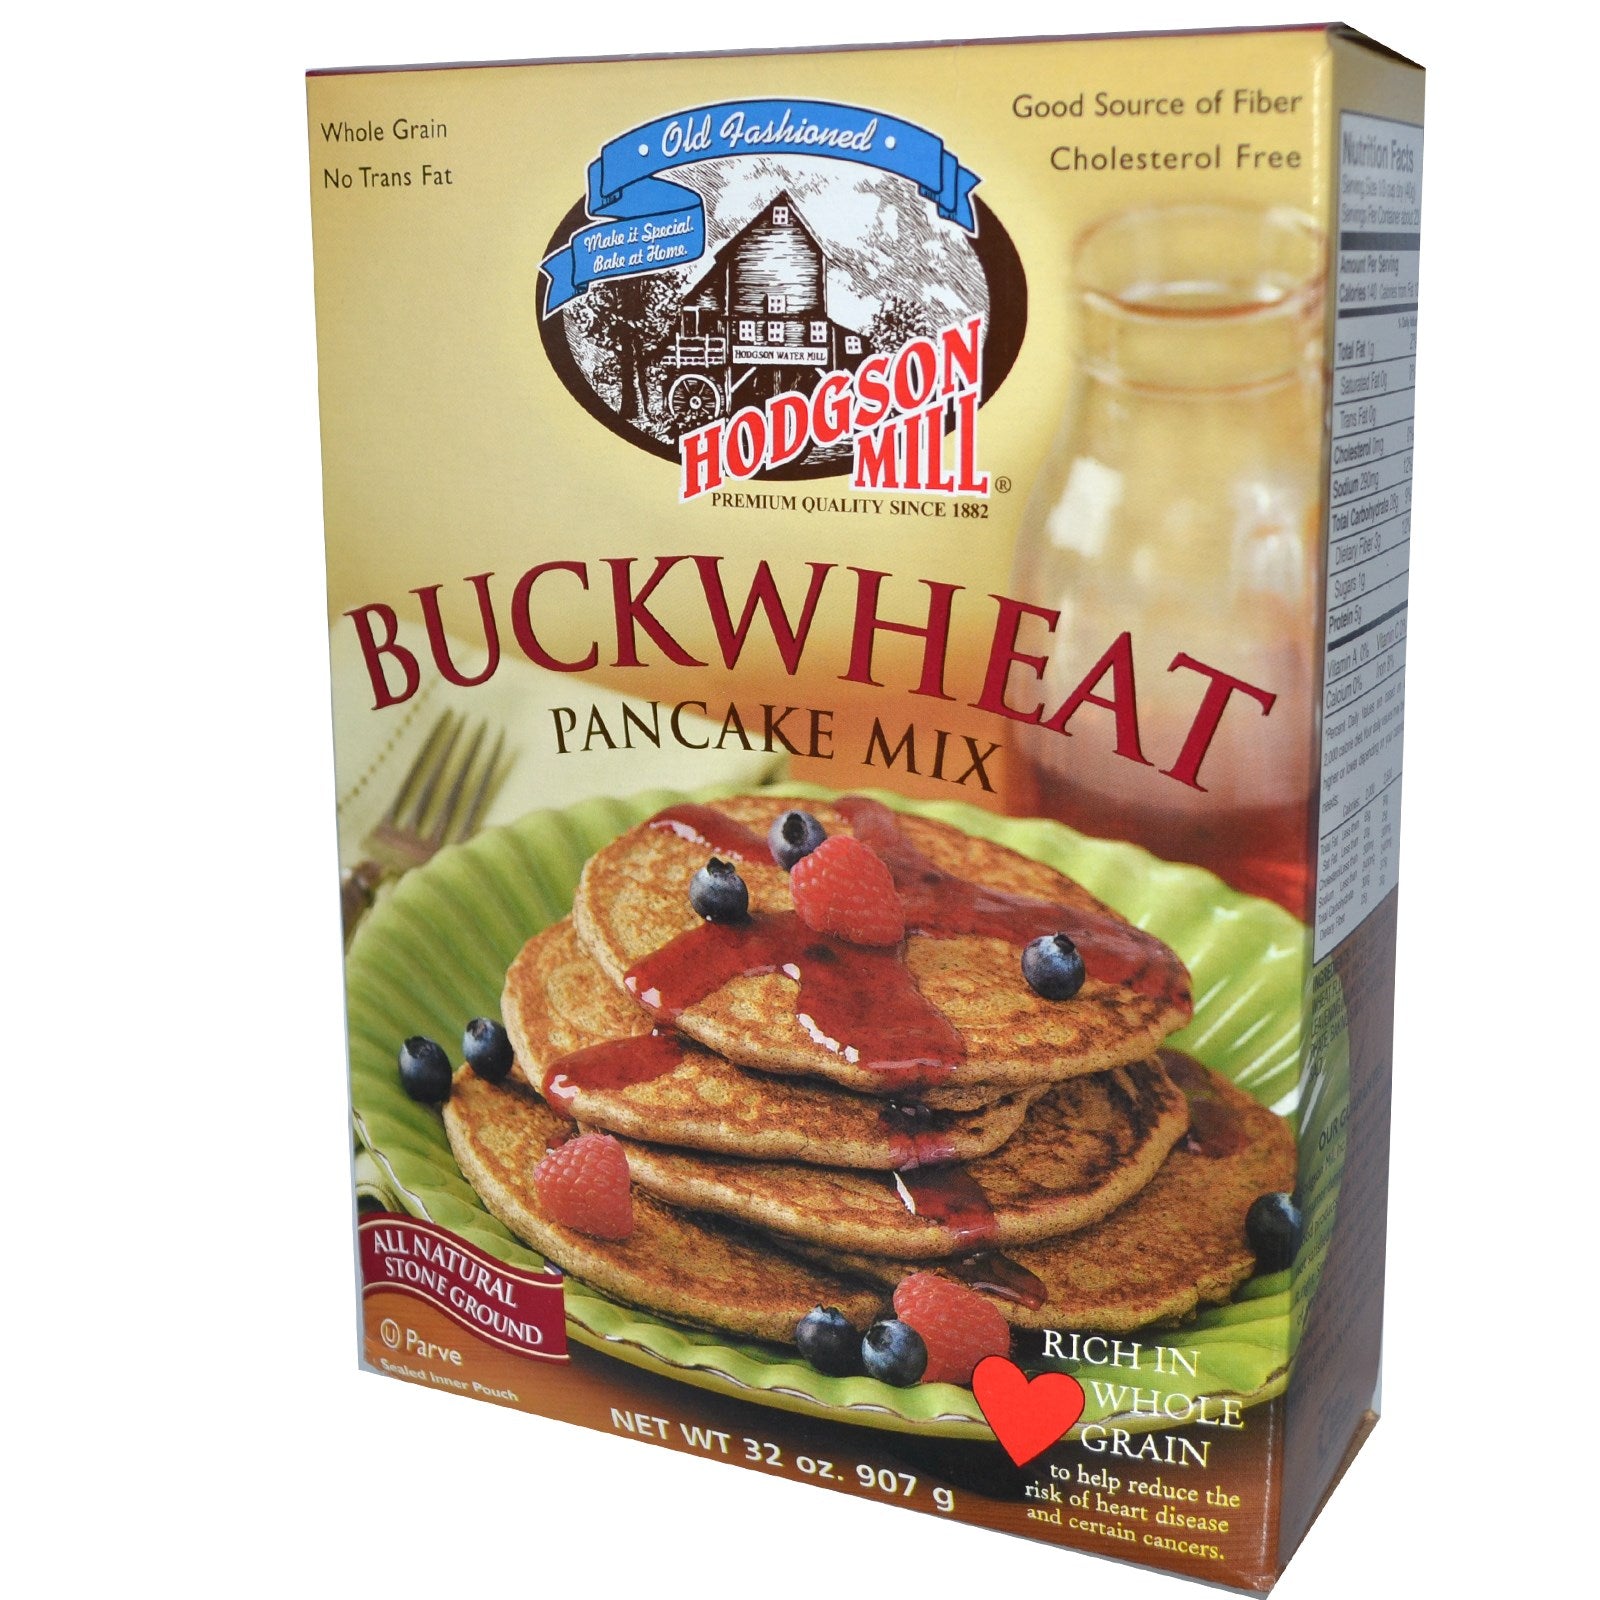 HODGSON MILL: Old Fashioned Buckwheat Pancake Mix, 32 oz - Vending Business Solutions